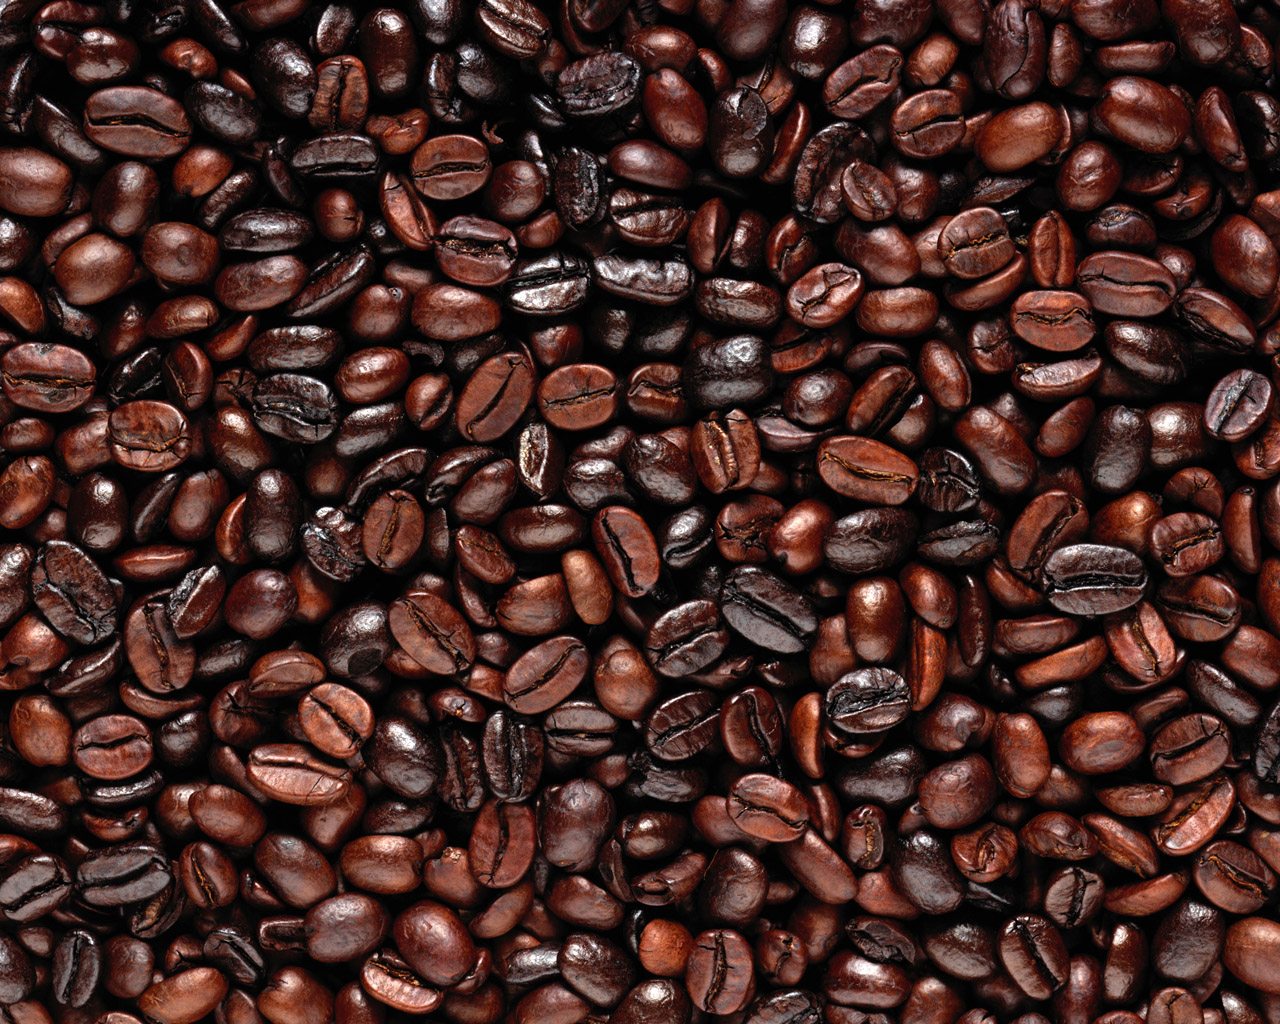 Types of Coffee Roasts, Light, Medium, Dark